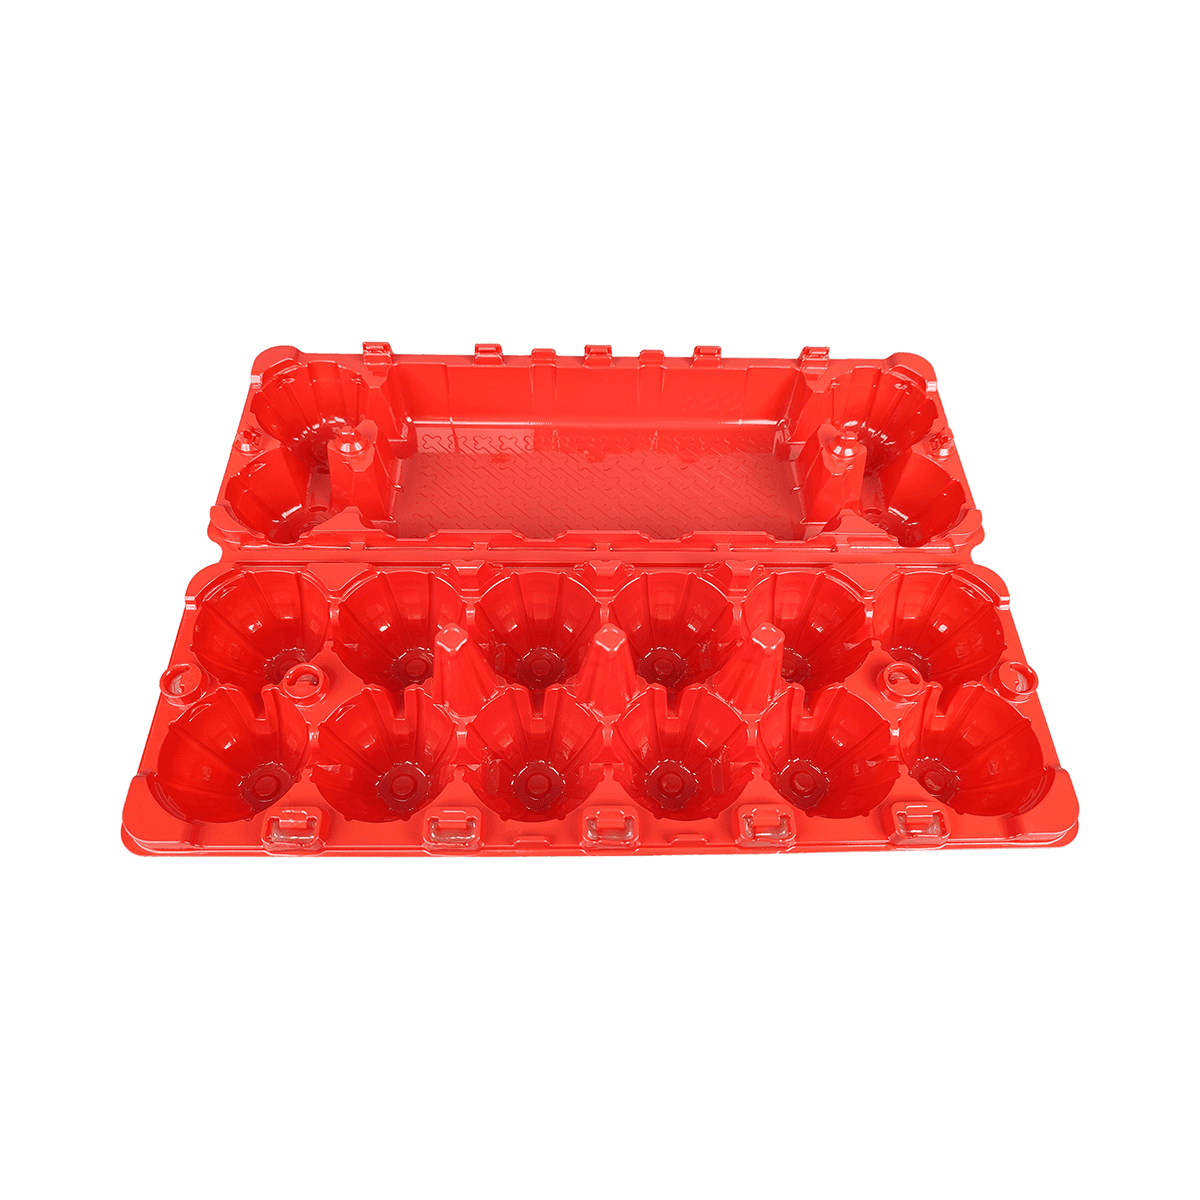 Reusable Sturdy Design Matte Red PET 12 Egg Cartons For Home Farm Market Refrigerator